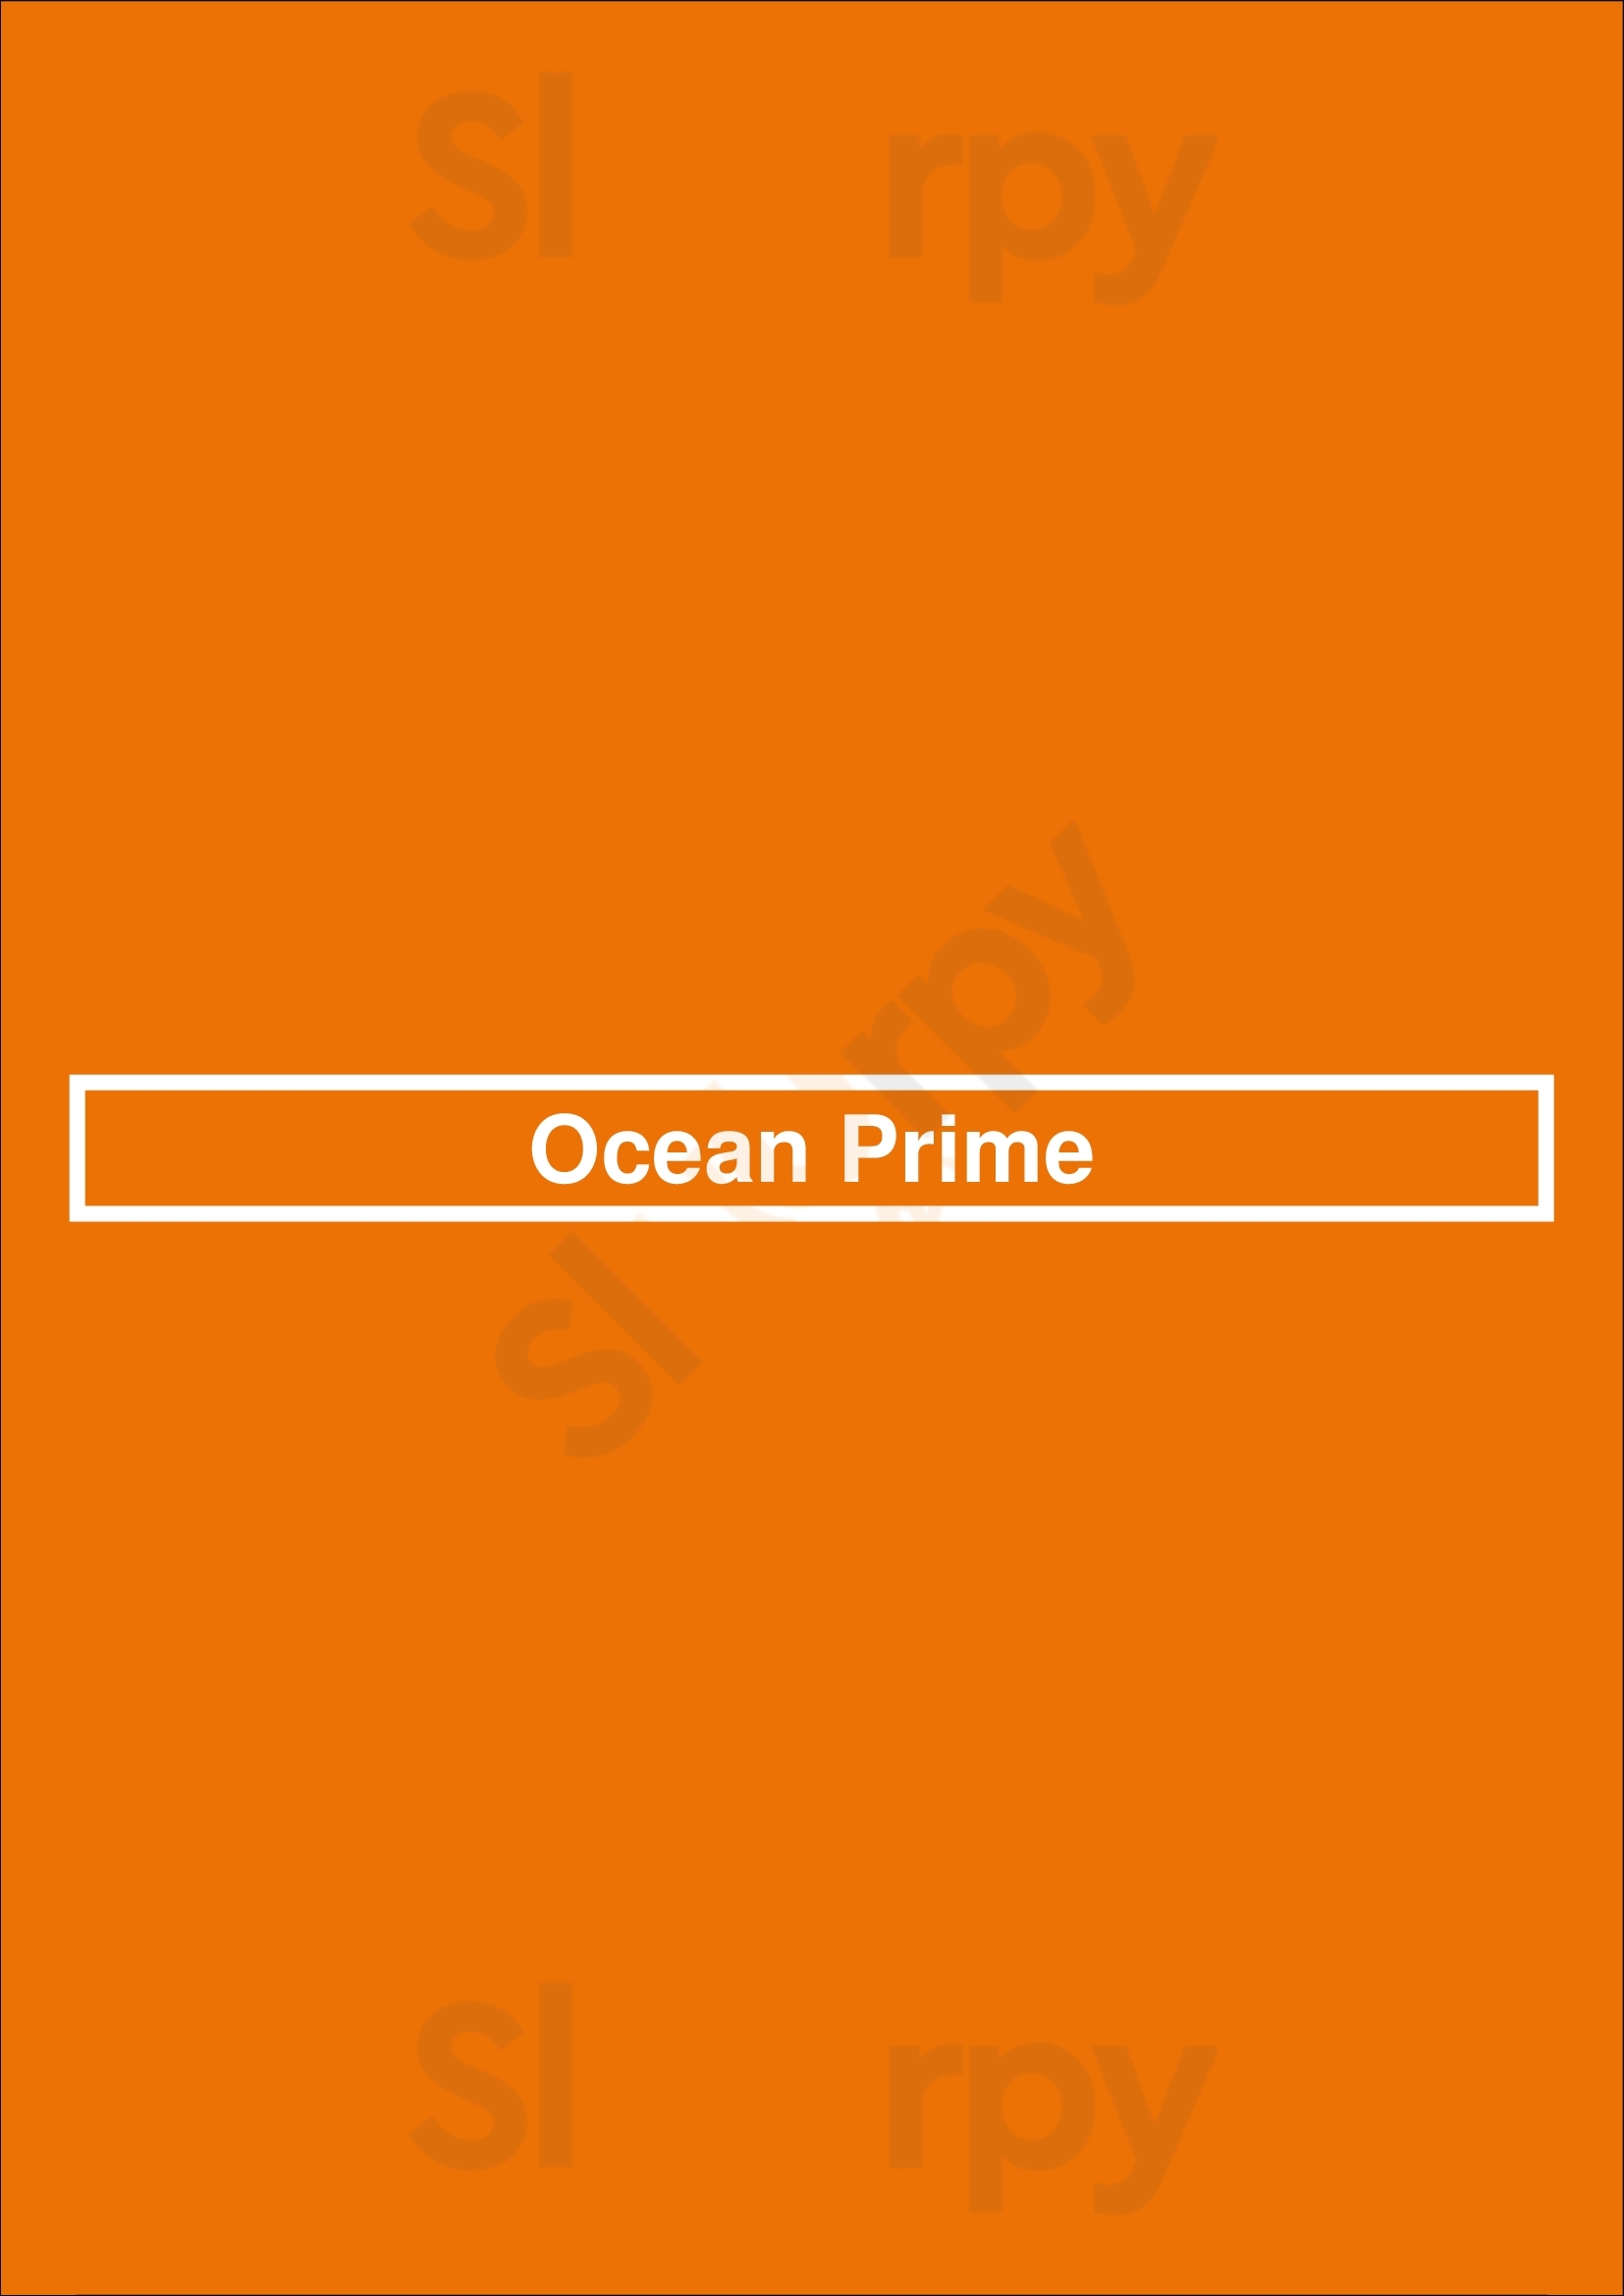 Ocean Prime Indianapolis Menu - 1